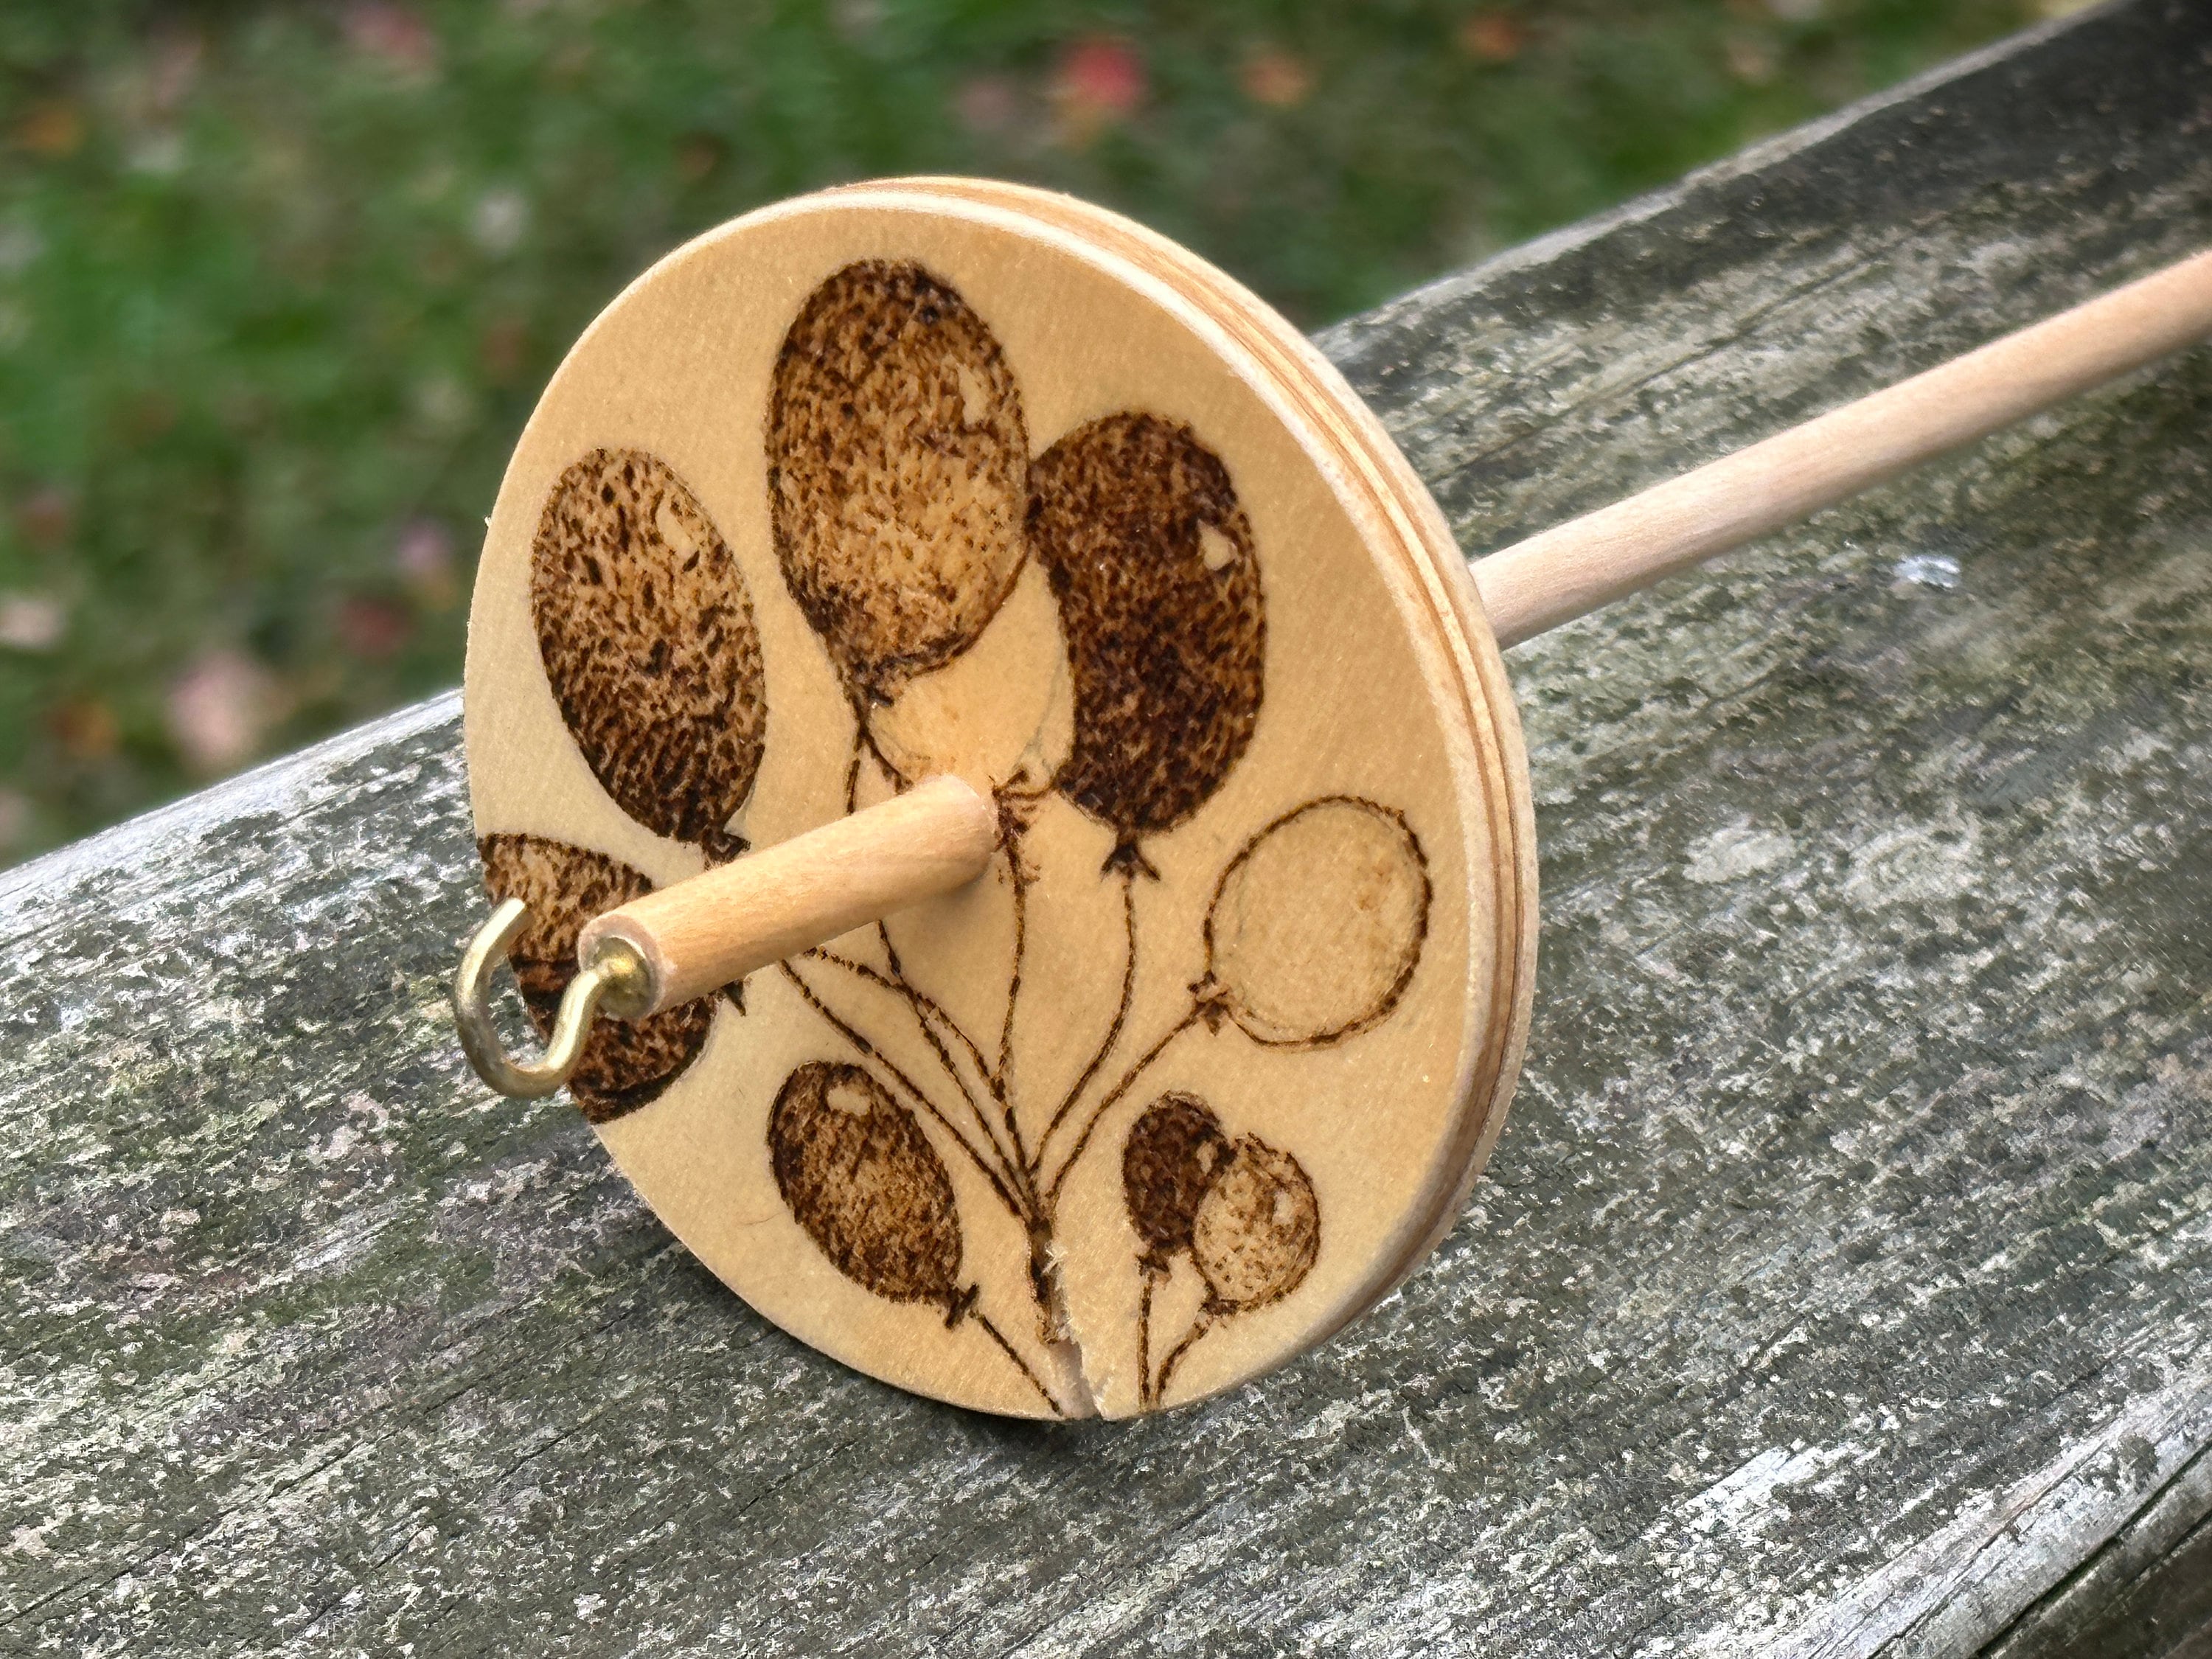 Handmade Supplies :: Sewing & Fiber :: Fiber Art Tools :: Drop Spindle,  Wooden Drop Spindle, Top Whorl Drop Spindle, Fiber art tool, Yarn Spinning,  .75 oz., Roving, Handcrafted, One of a Kind